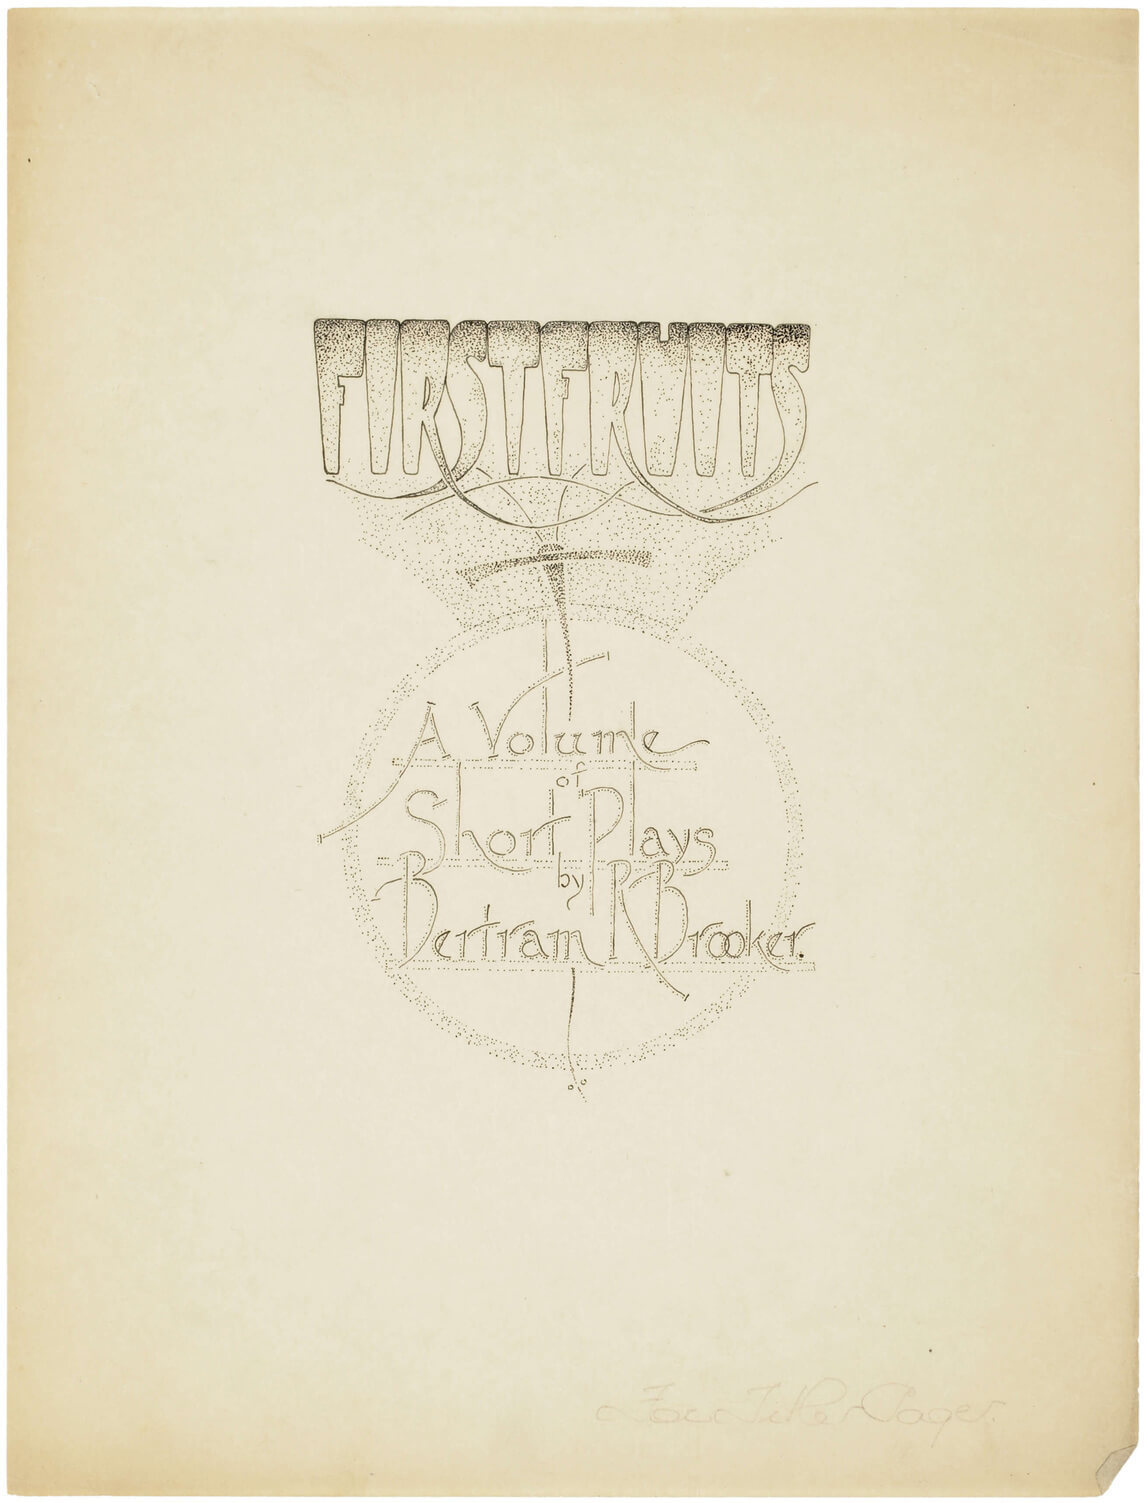 Illustration de la page couverture de « First Fruits: A Volume of Short Plays by Bertram R. Brooker », v.1913-1915